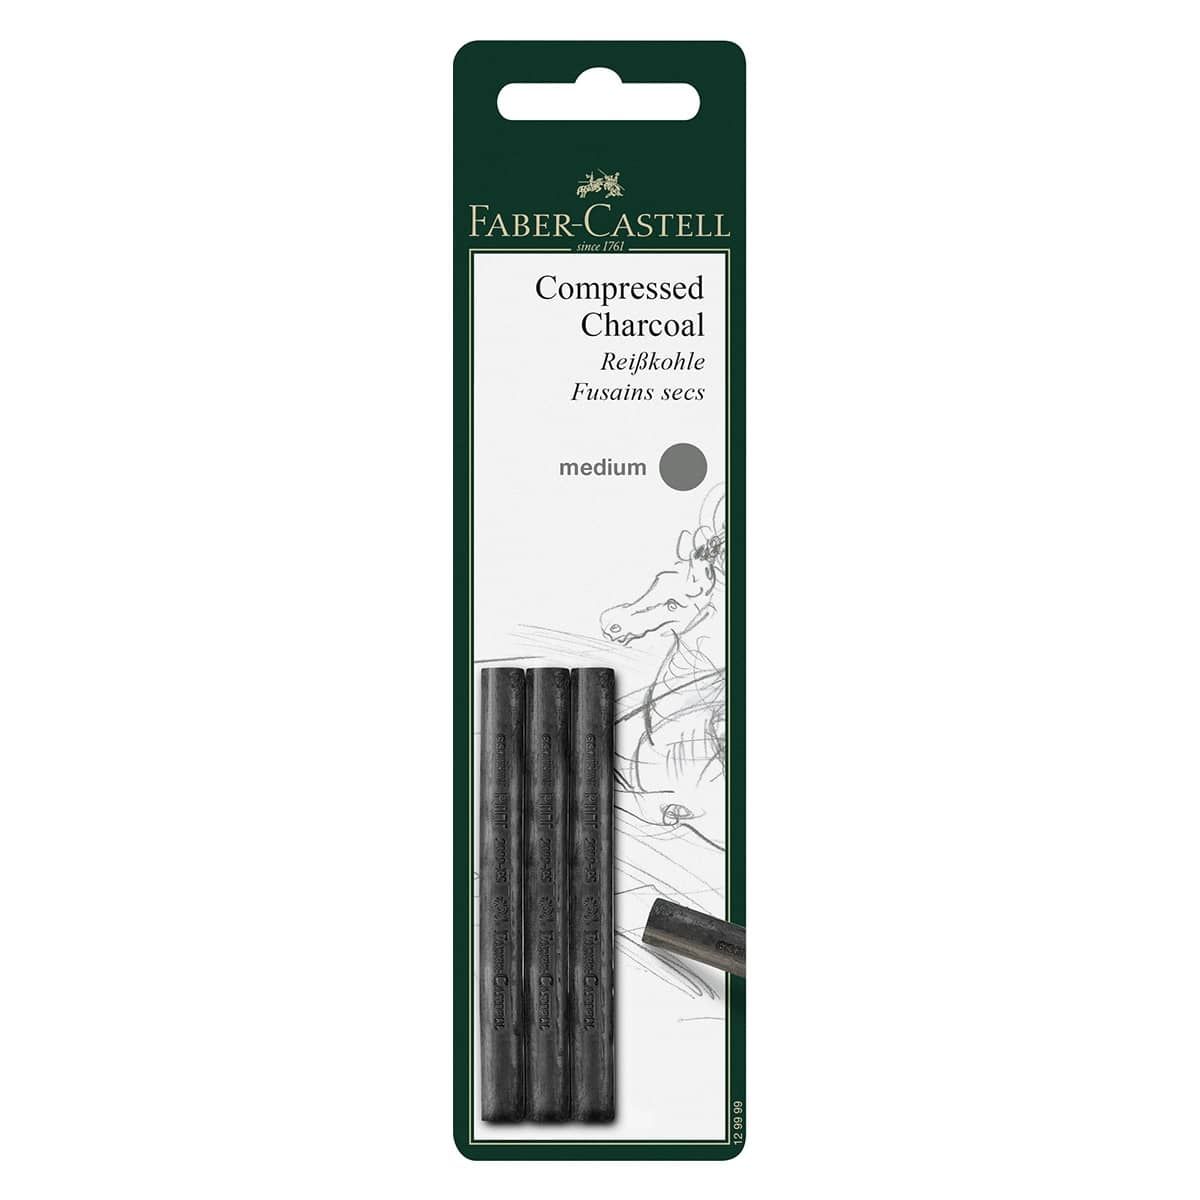 Faber-Castell Pitt Compressed Charcoal Sticks - Medium - Set of 3